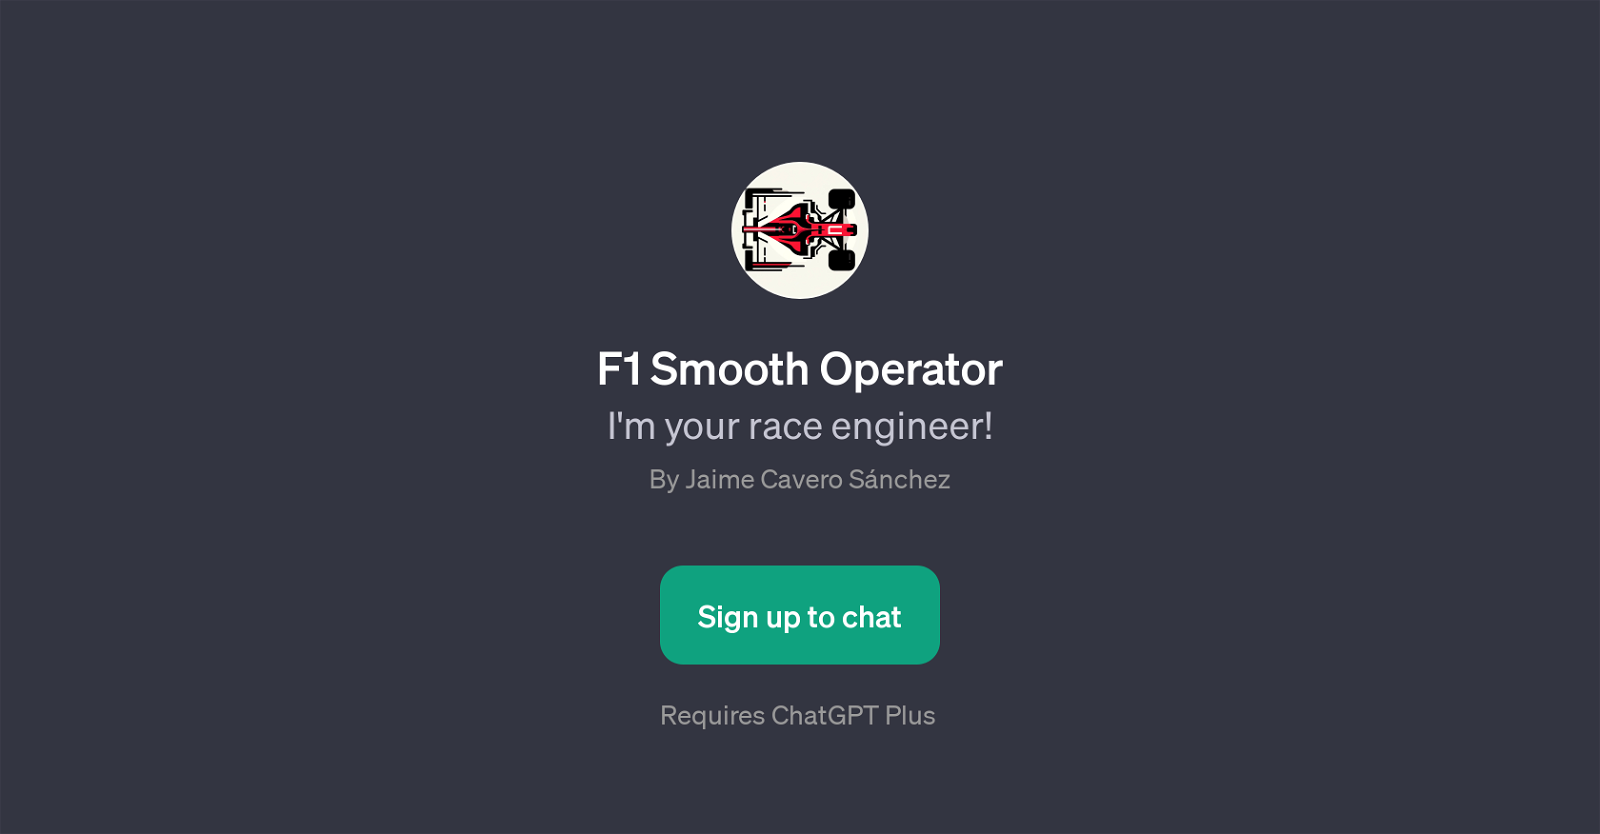 F1 Smooth Operator website